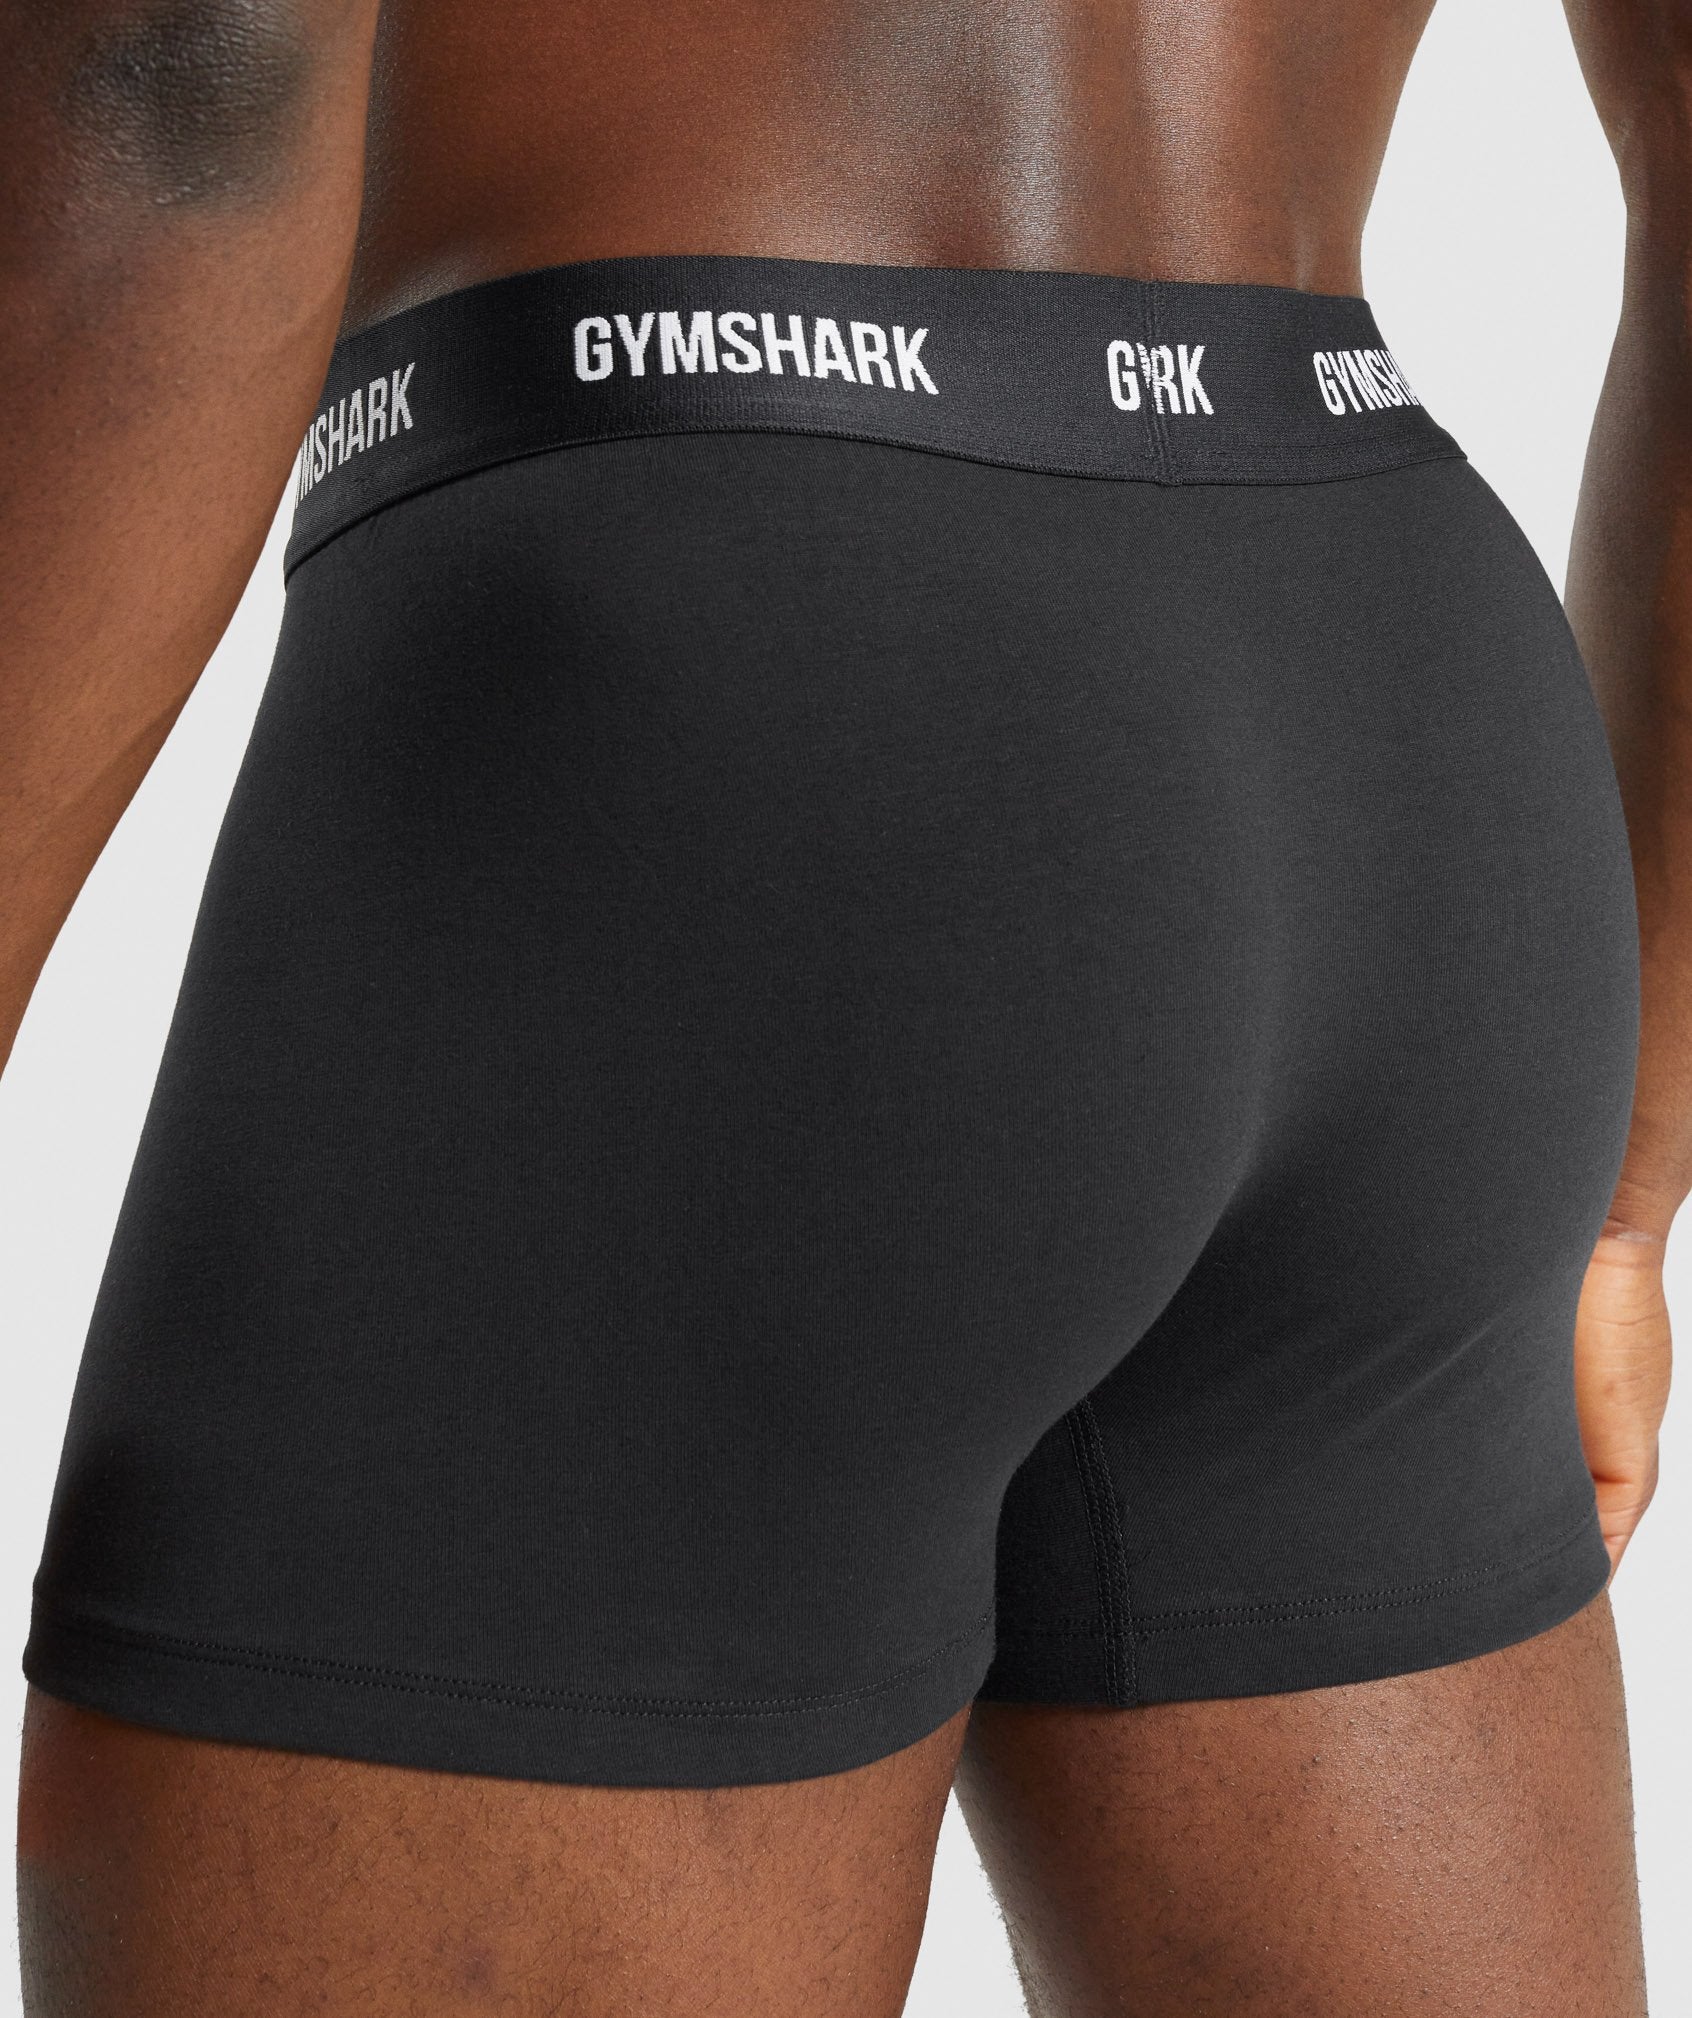 GYMSHARK Men's Sports Tech Boxers 5 Pack, Black, Medium 